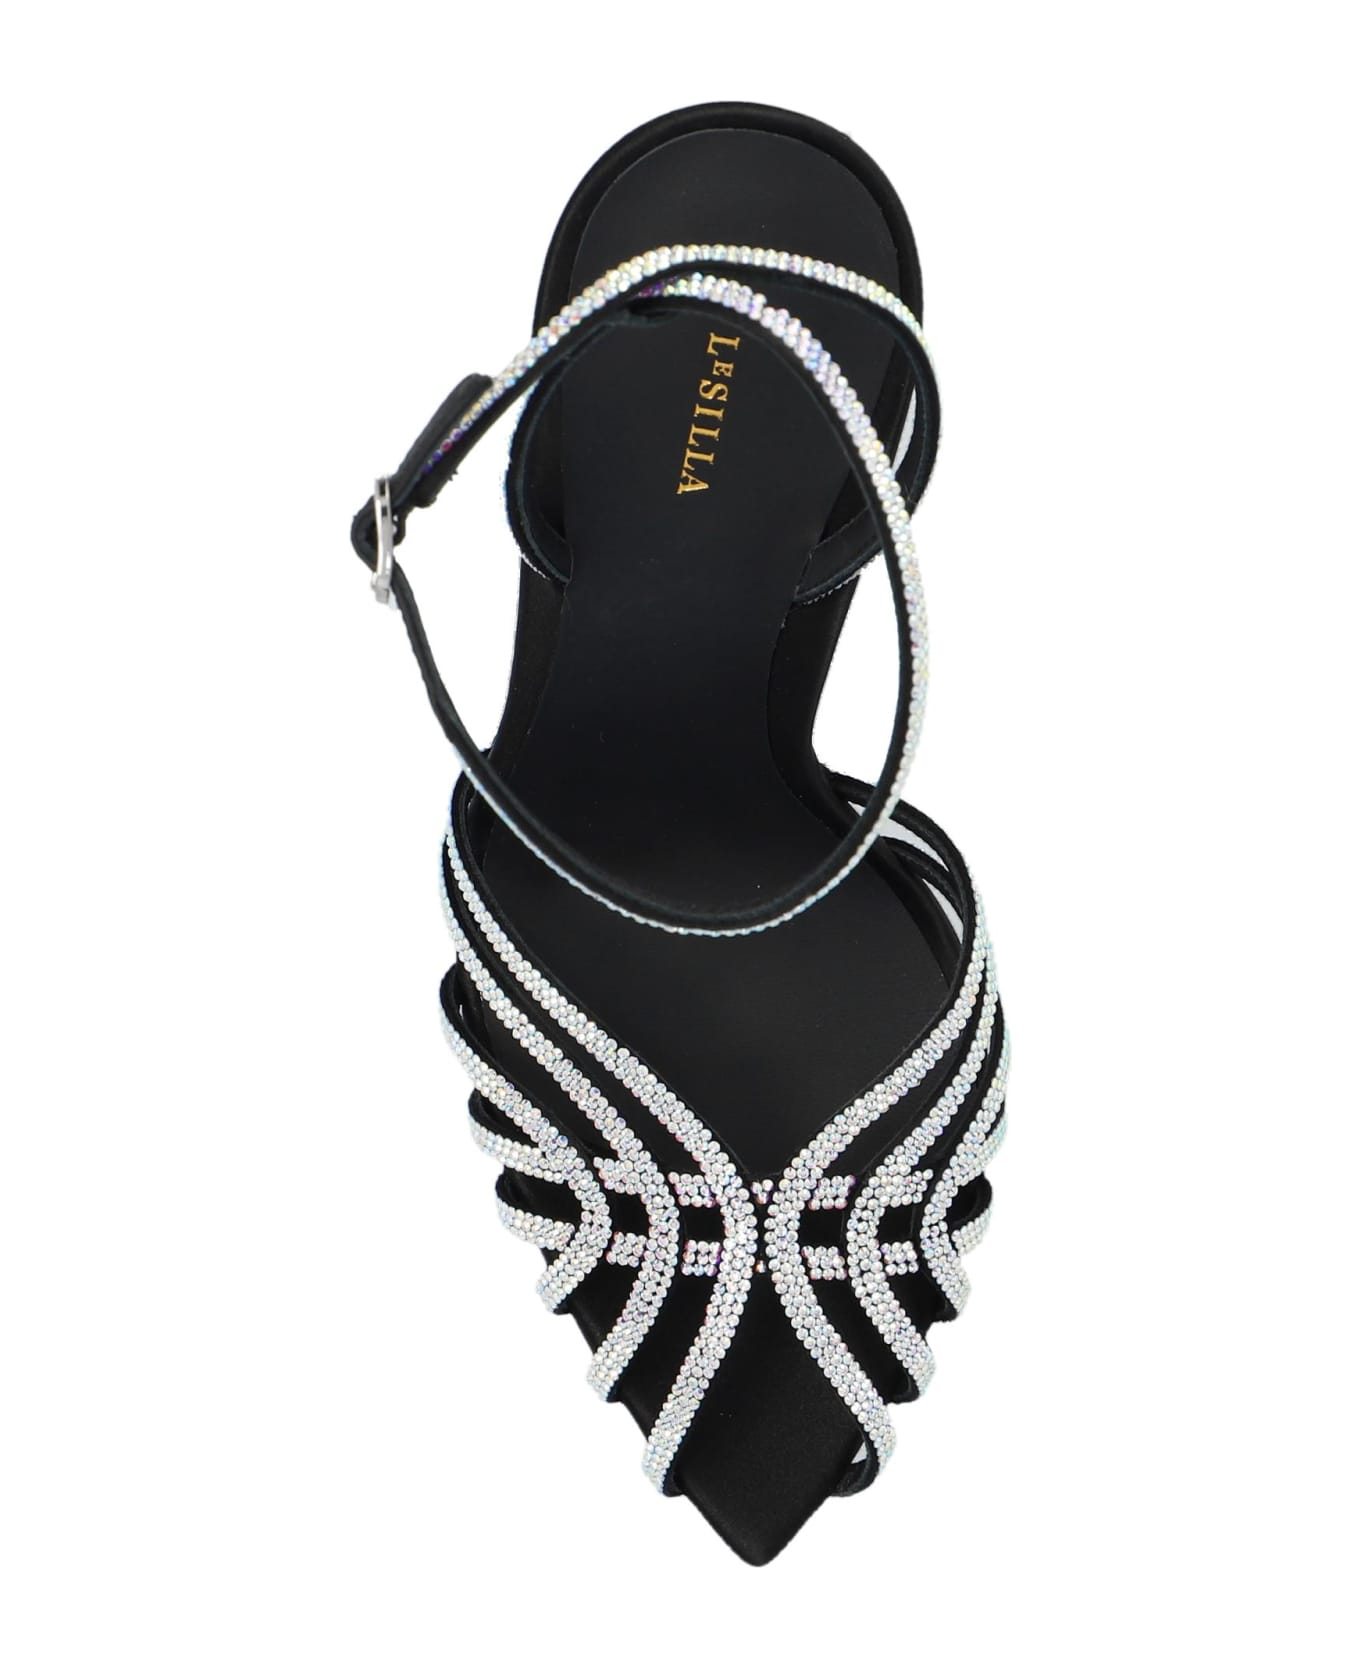 Le Silla 'bella' Heeled Sandals - NERO/CRYSTAL